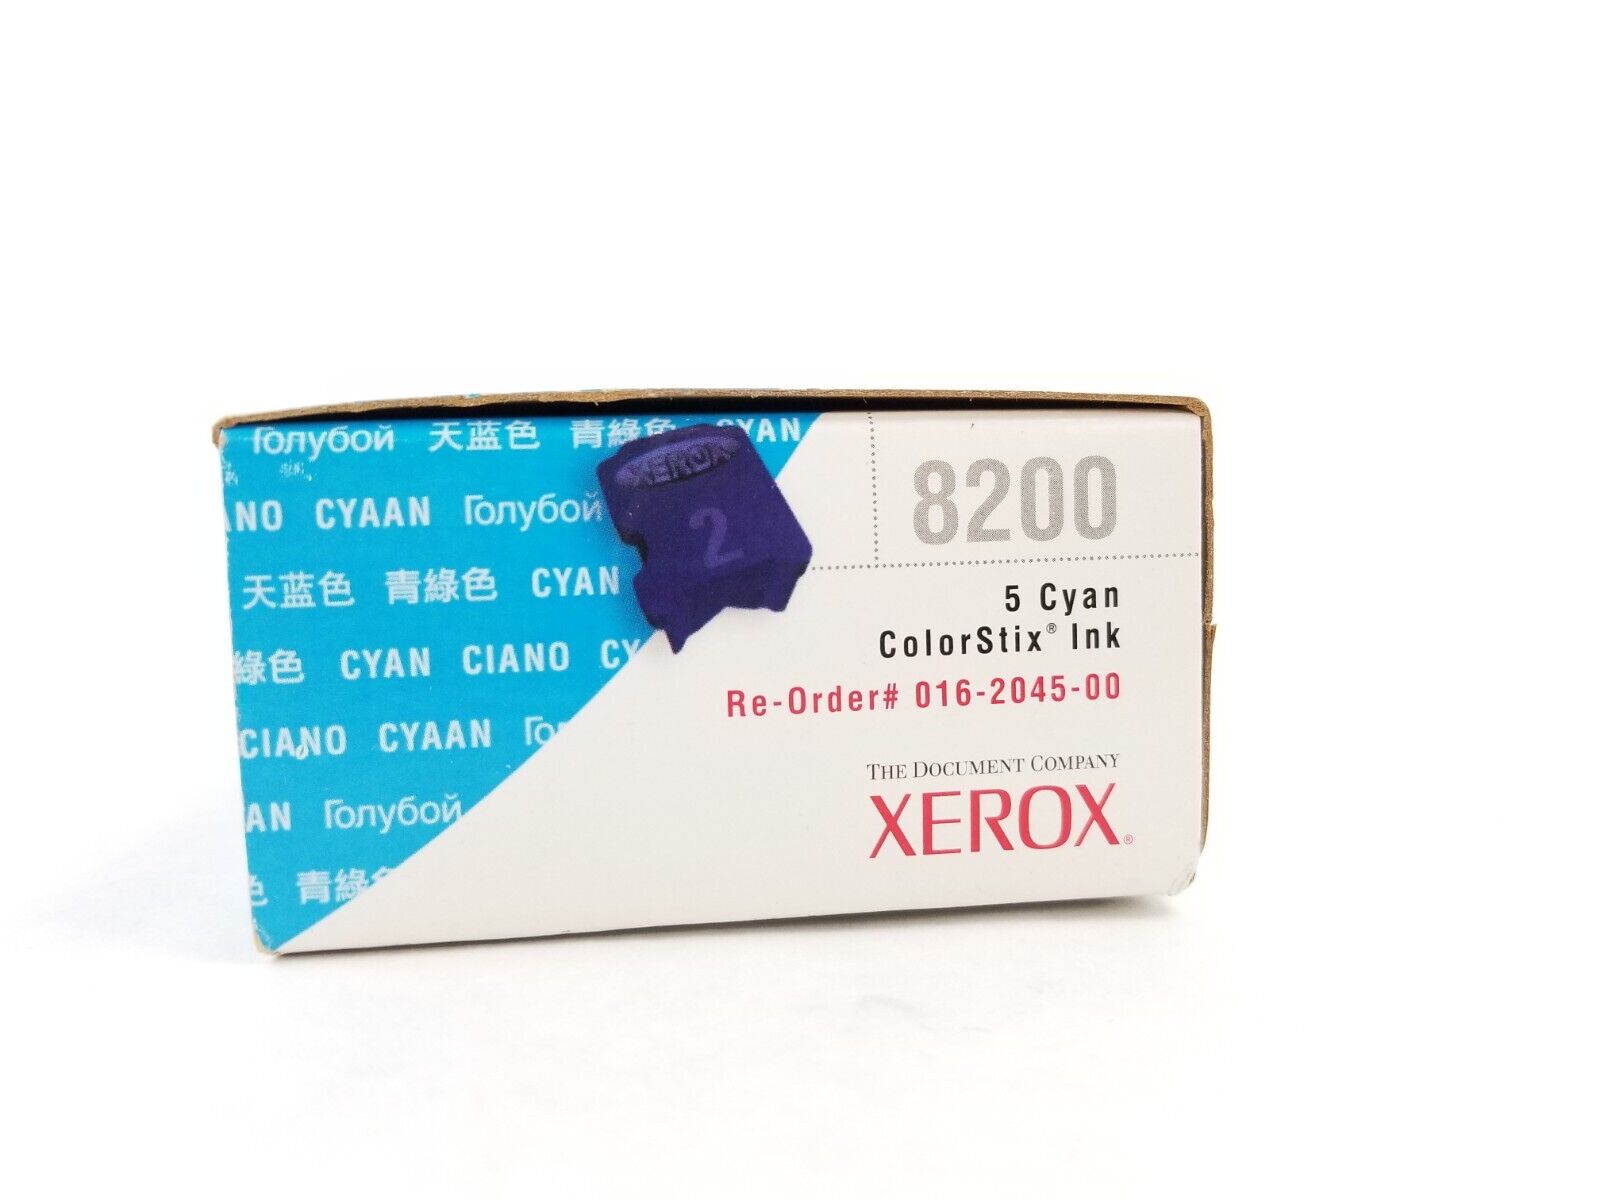 Genuine OEM Xerox Phaser 8200 5 Cyan ColorStix Ink Color Printer 016-2045-00